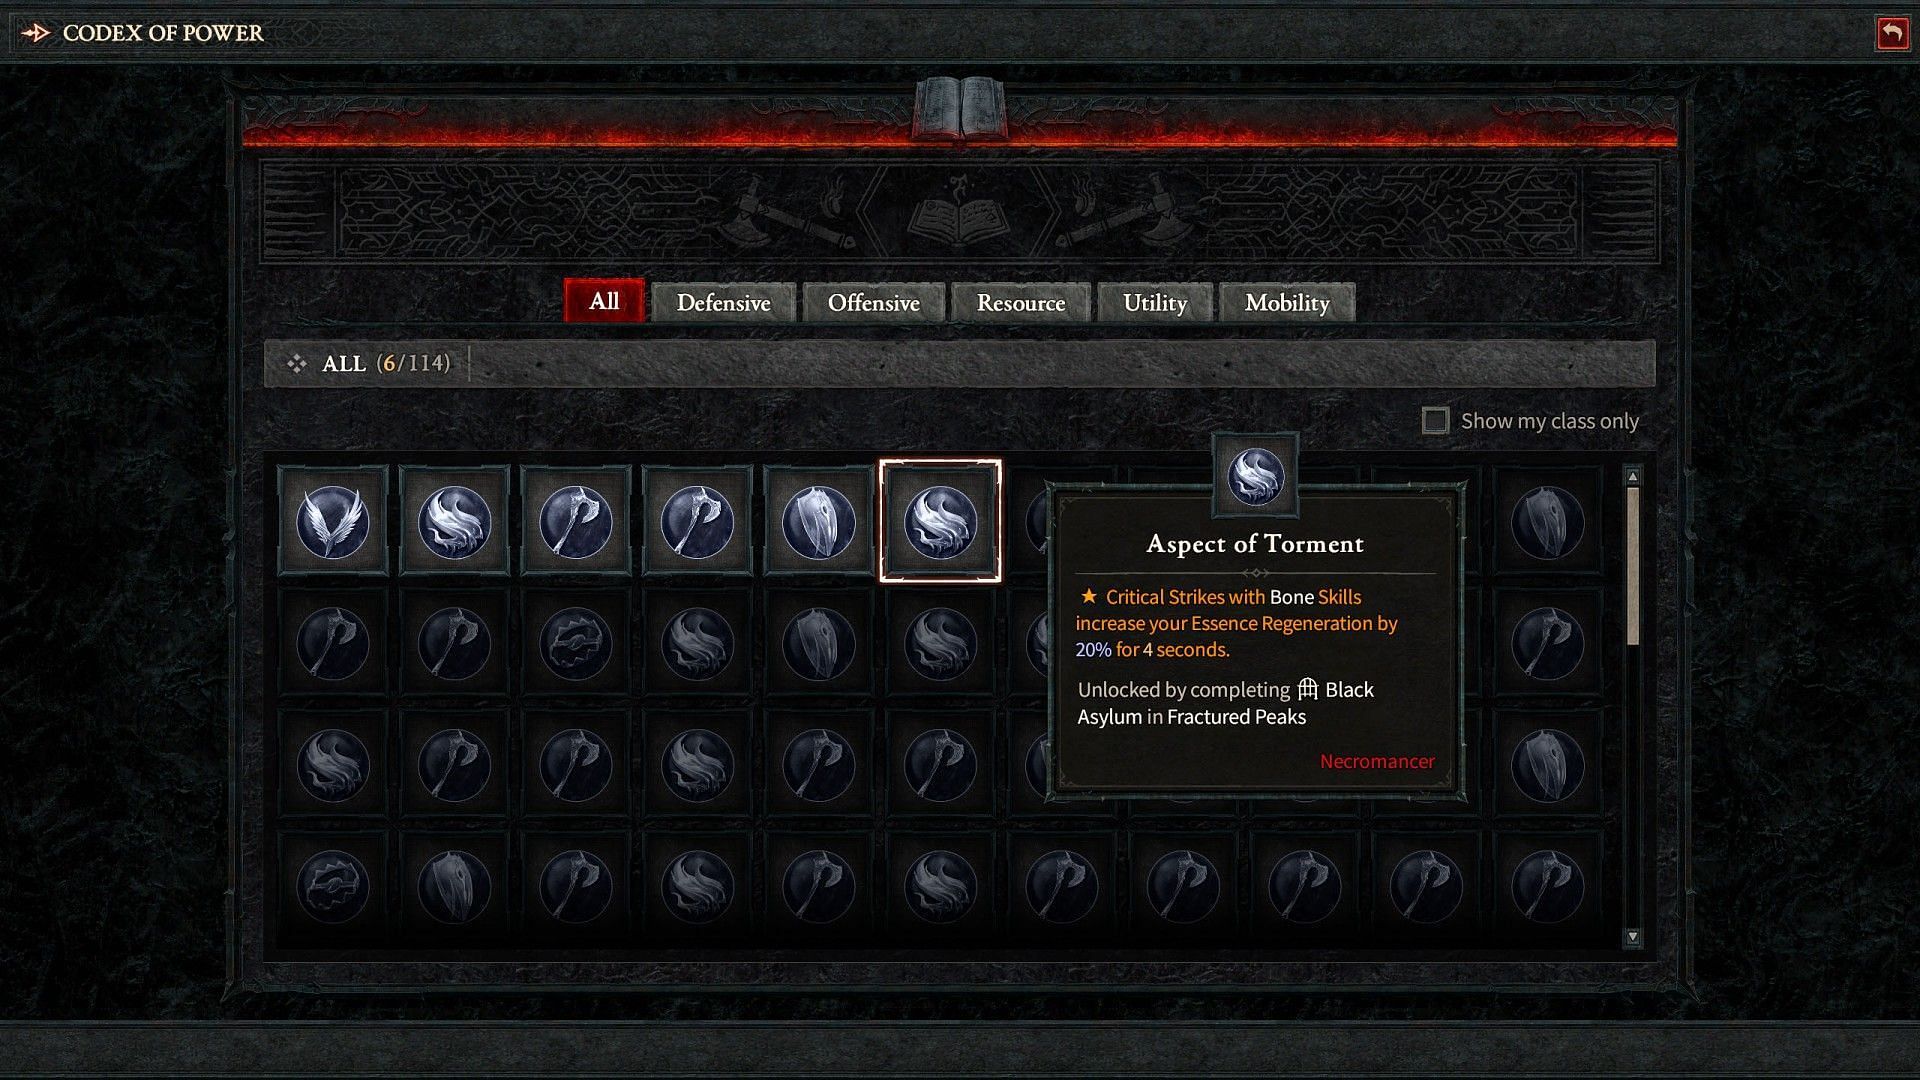 Aspect of Torment increases Essence generation (Image via Diablo 4/Blizzard Entertainment)